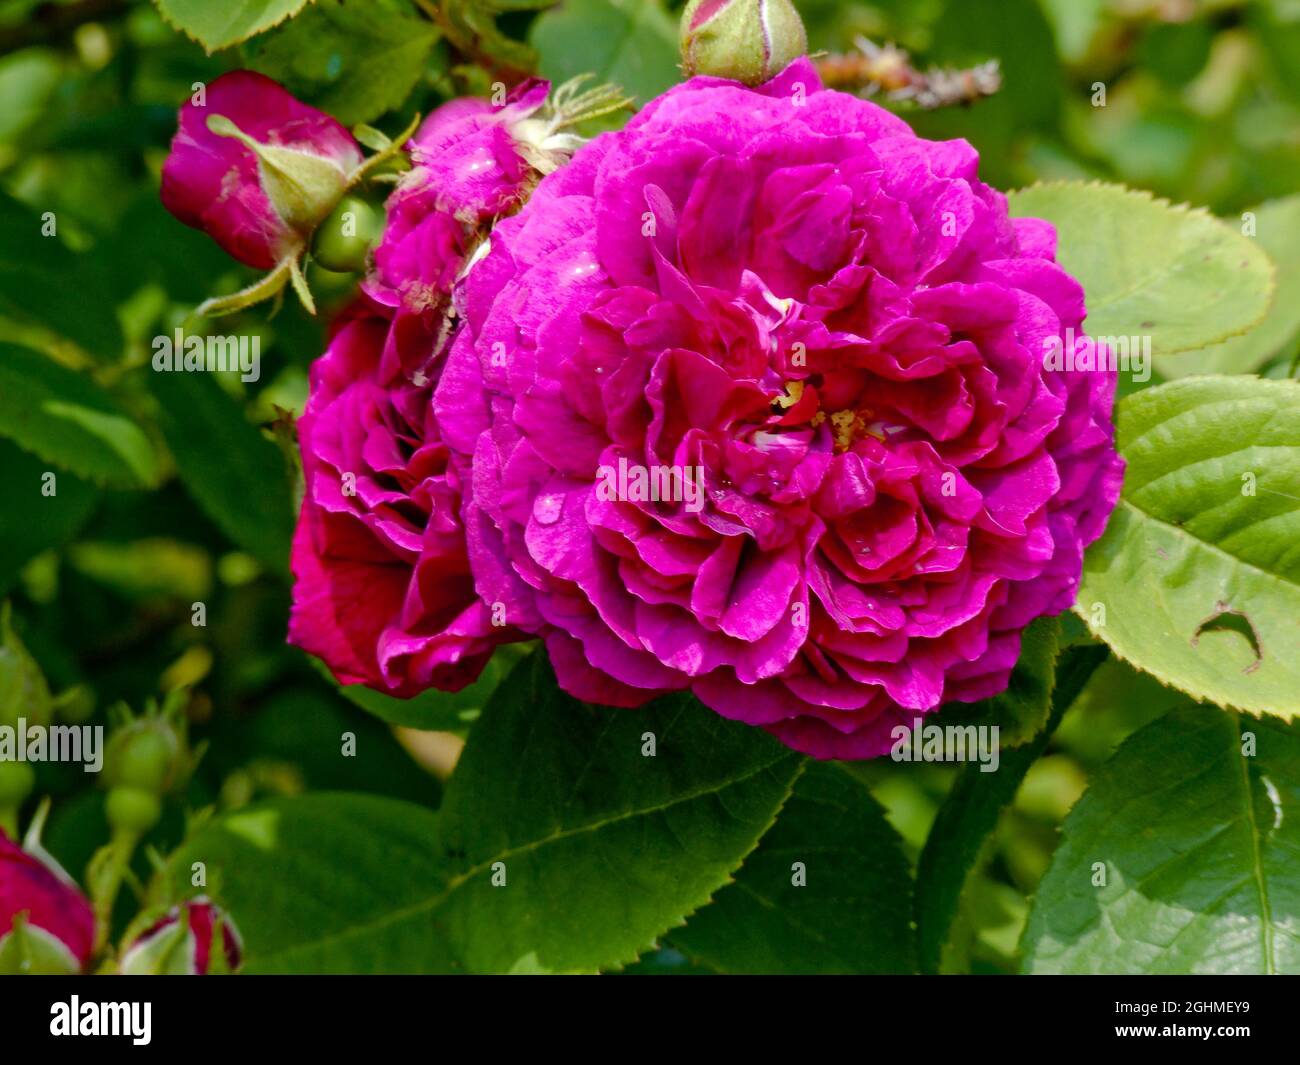 Rose tree 'Souvenir de Victor Emmanuel' in bloom in a garden Stock Photo -  Alamy